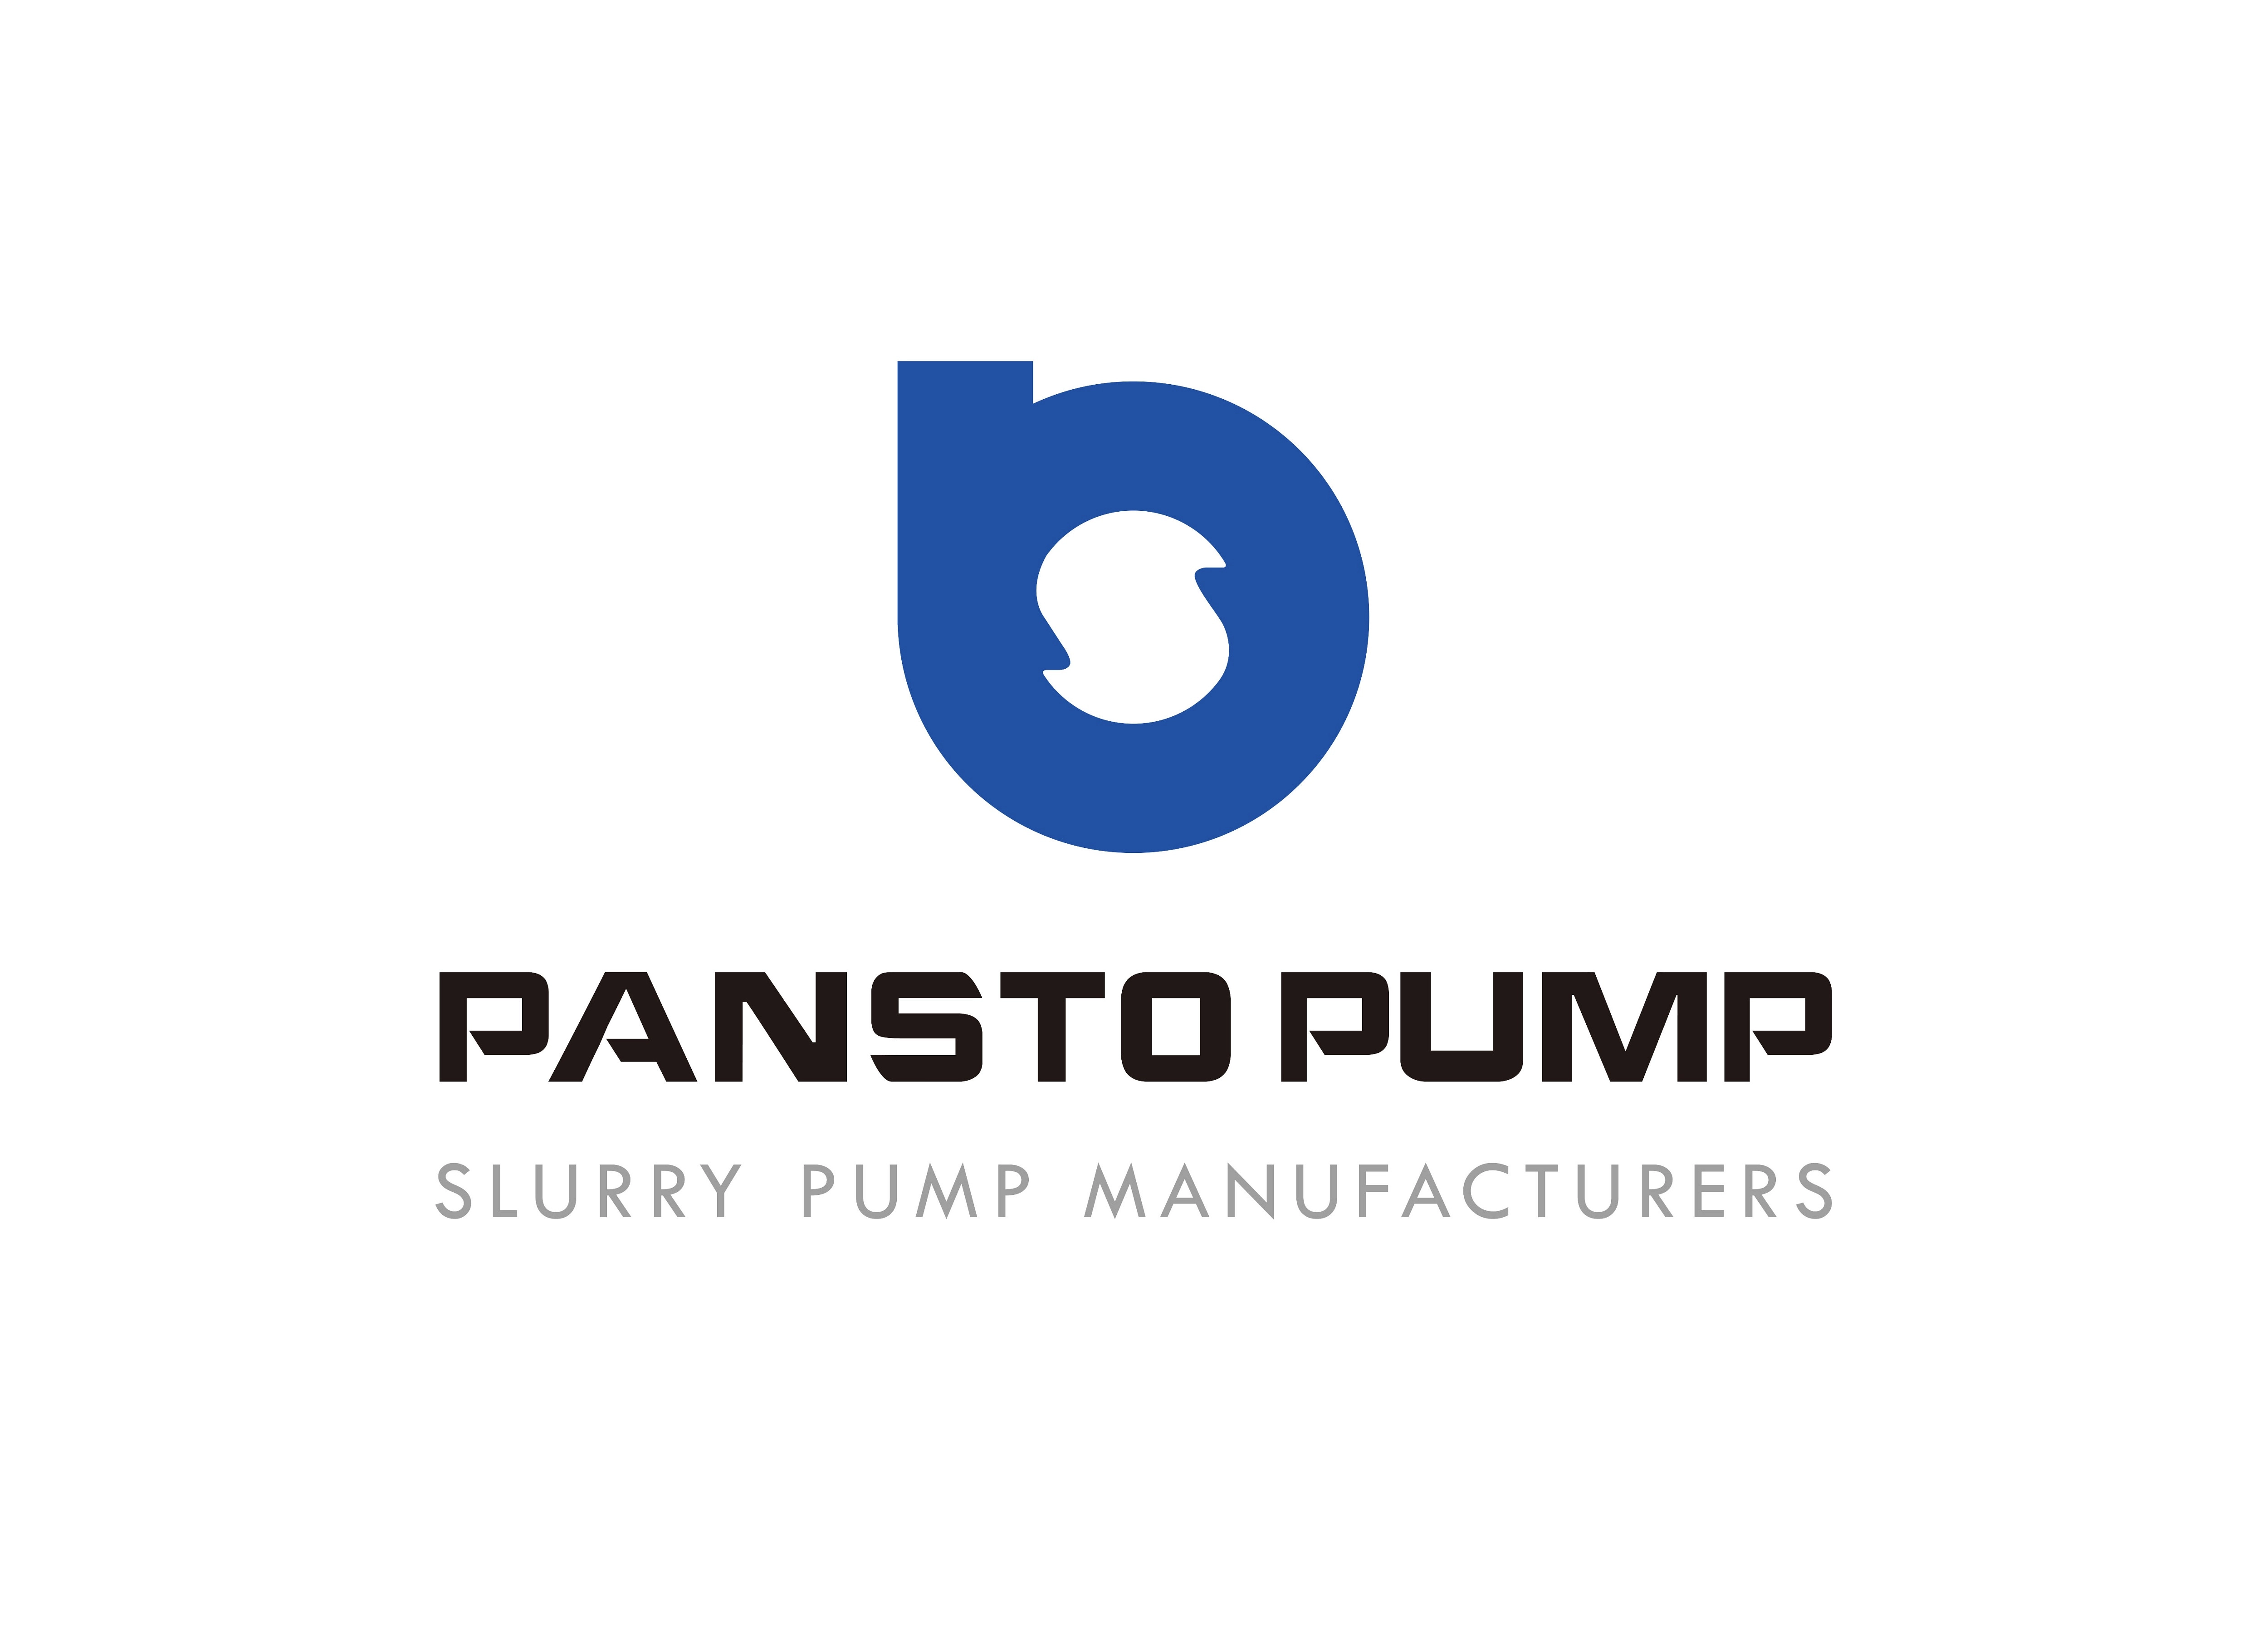 Shijiazhuang Pansto Pump Industry Co., Ltd